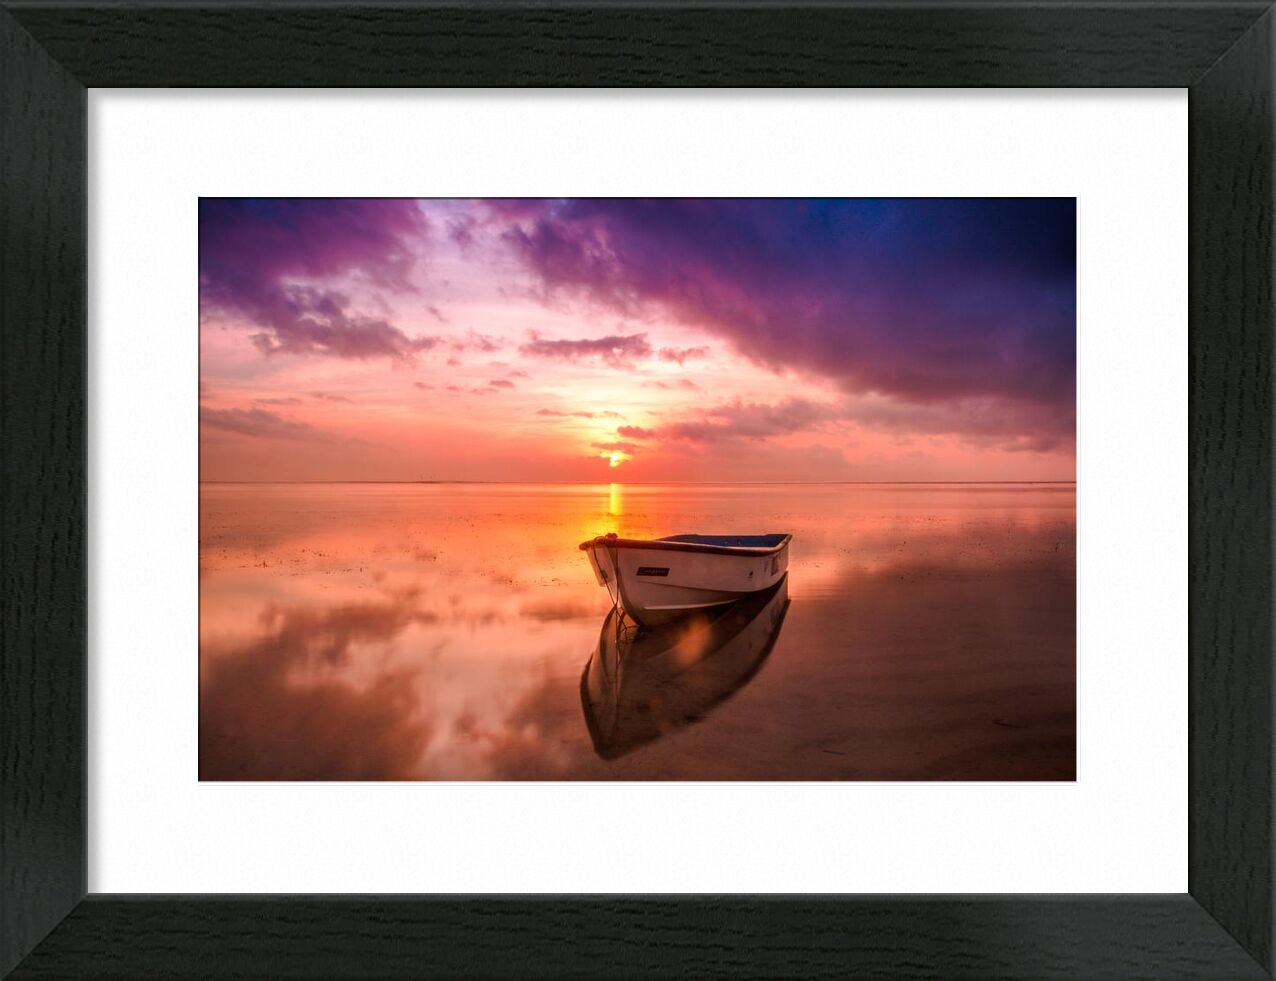 On the rowboat from Pierre Gaultier, Prodi Art, water, sunset, sunrise, Sun, sky, seascape, sea, reflection, outdoors, ocean, nature, dusk, dawn, boat, beach